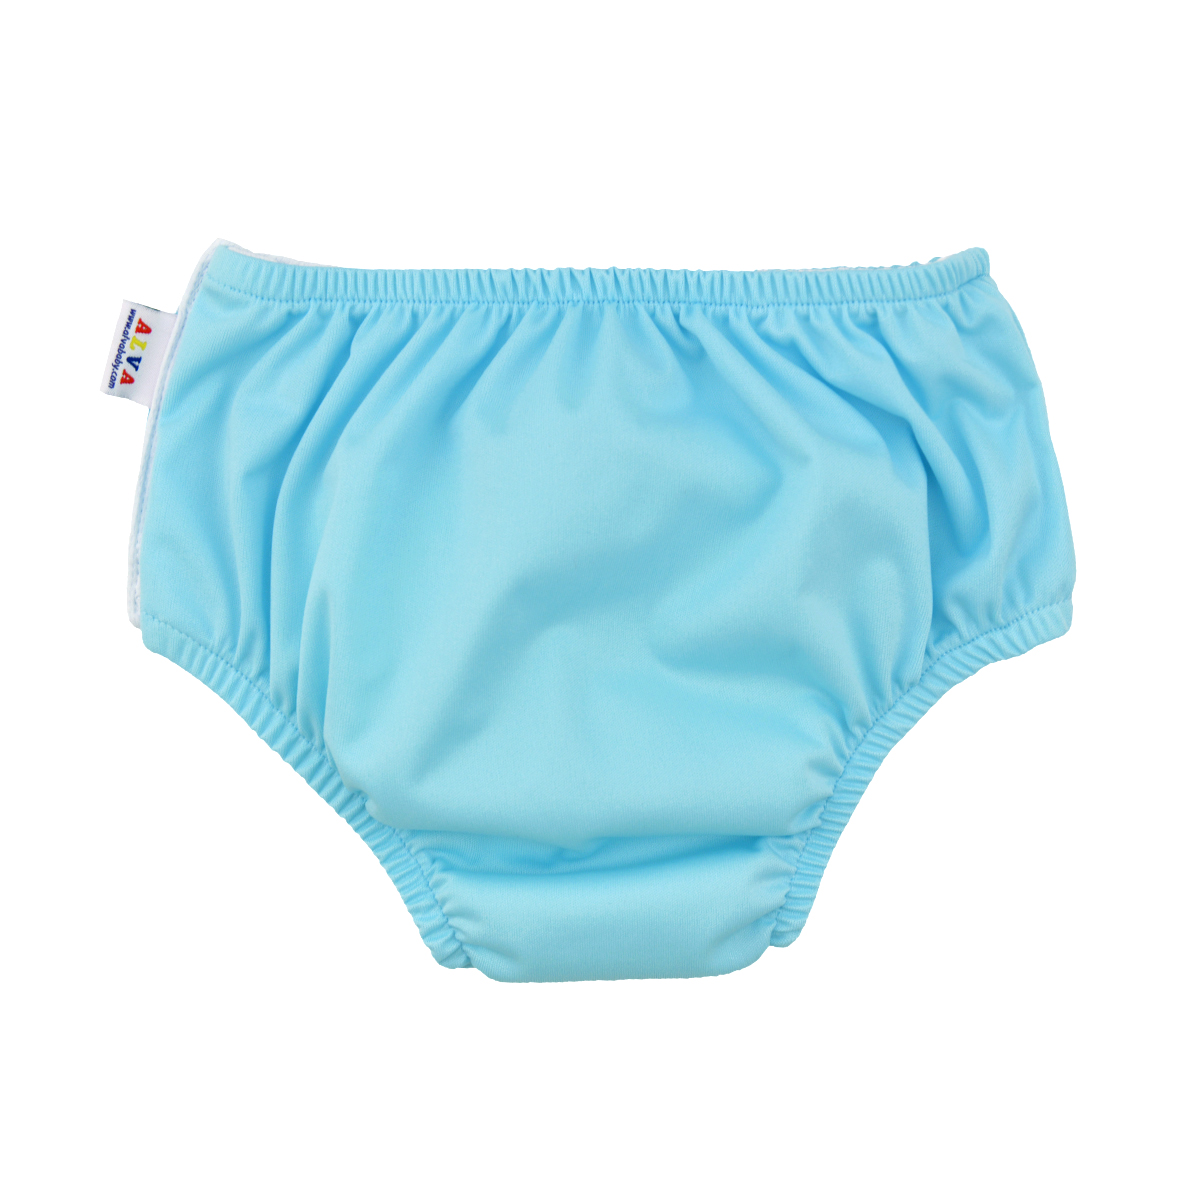 Swim Diaper & Training Pants FSB03 - 12-18 Months - S